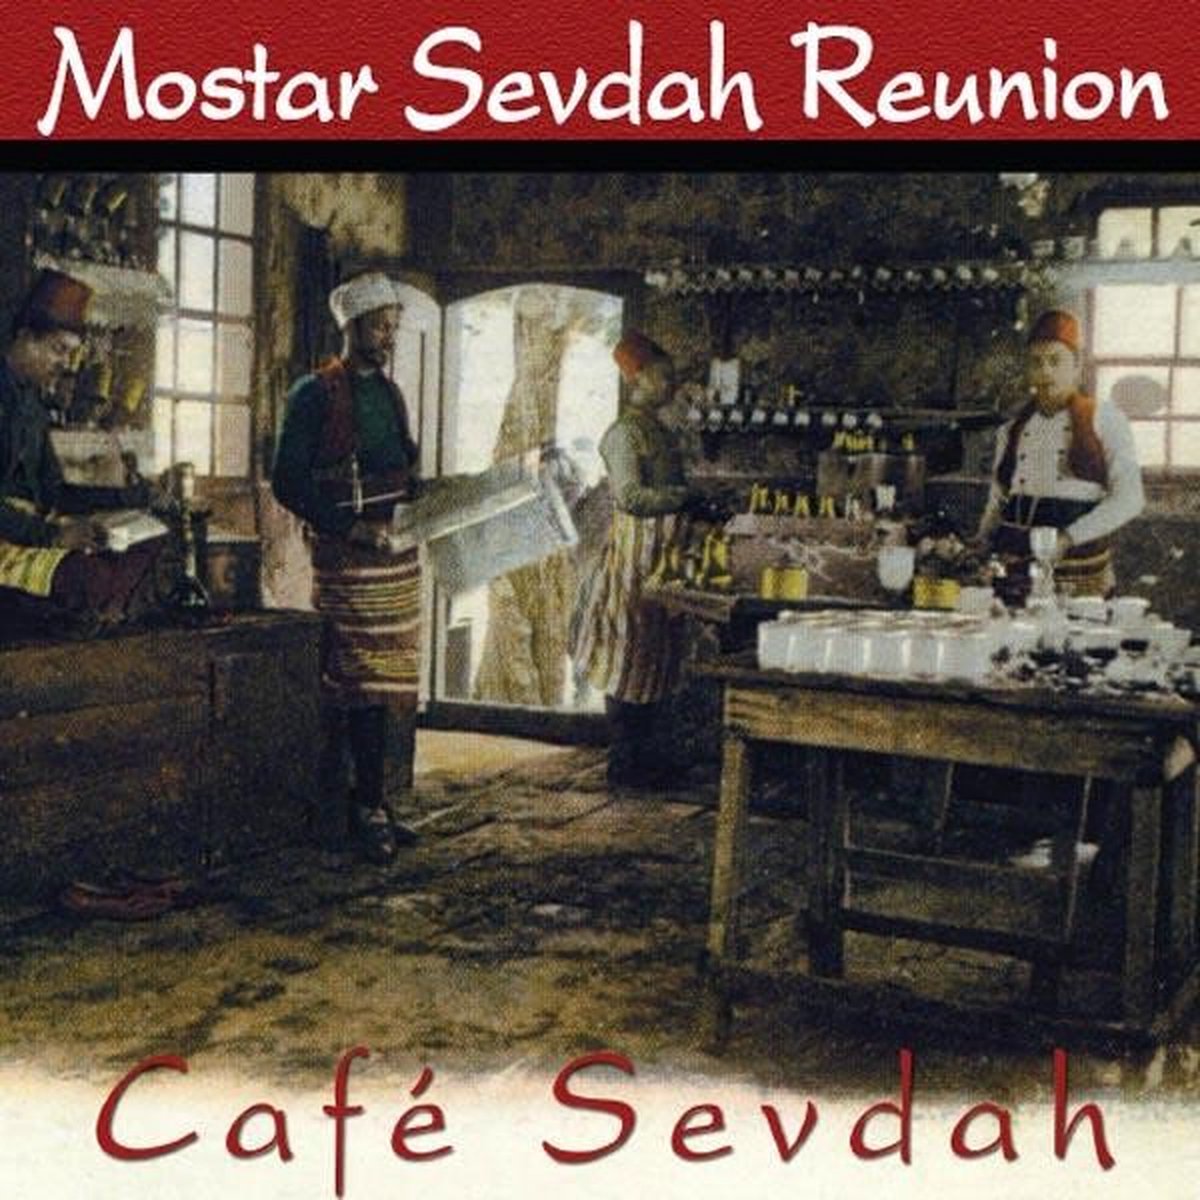 Mostar Sevdah Reunion - Café Sevdah (CD) - Mostar Sevdah Reunion